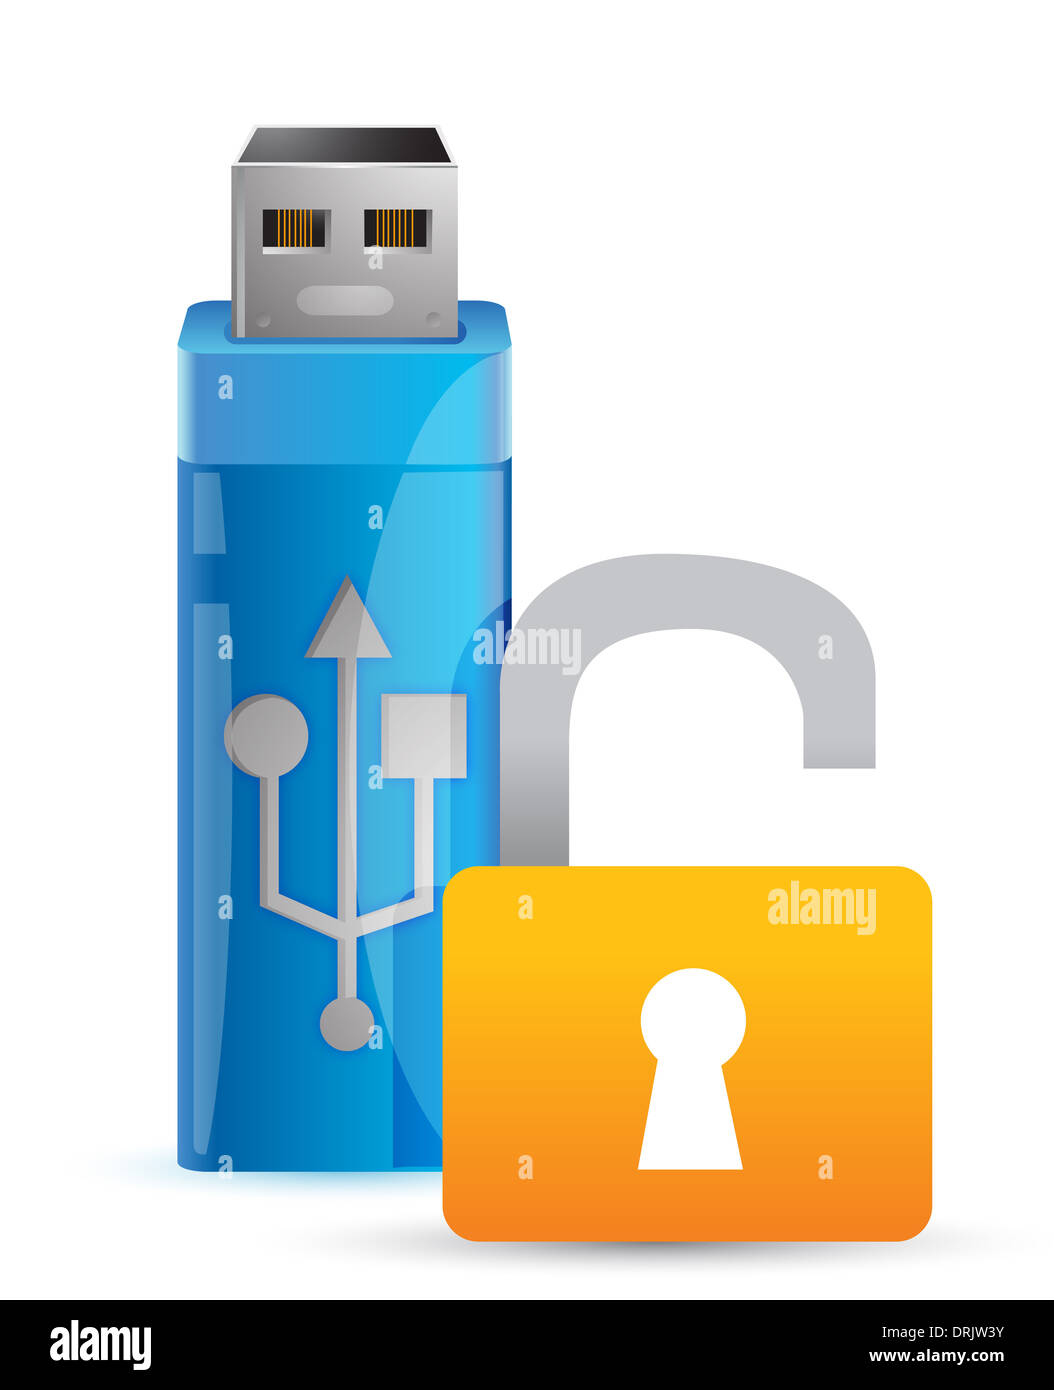 Usb unlock and flash drive as key illustration design Stock Photo - Alamy